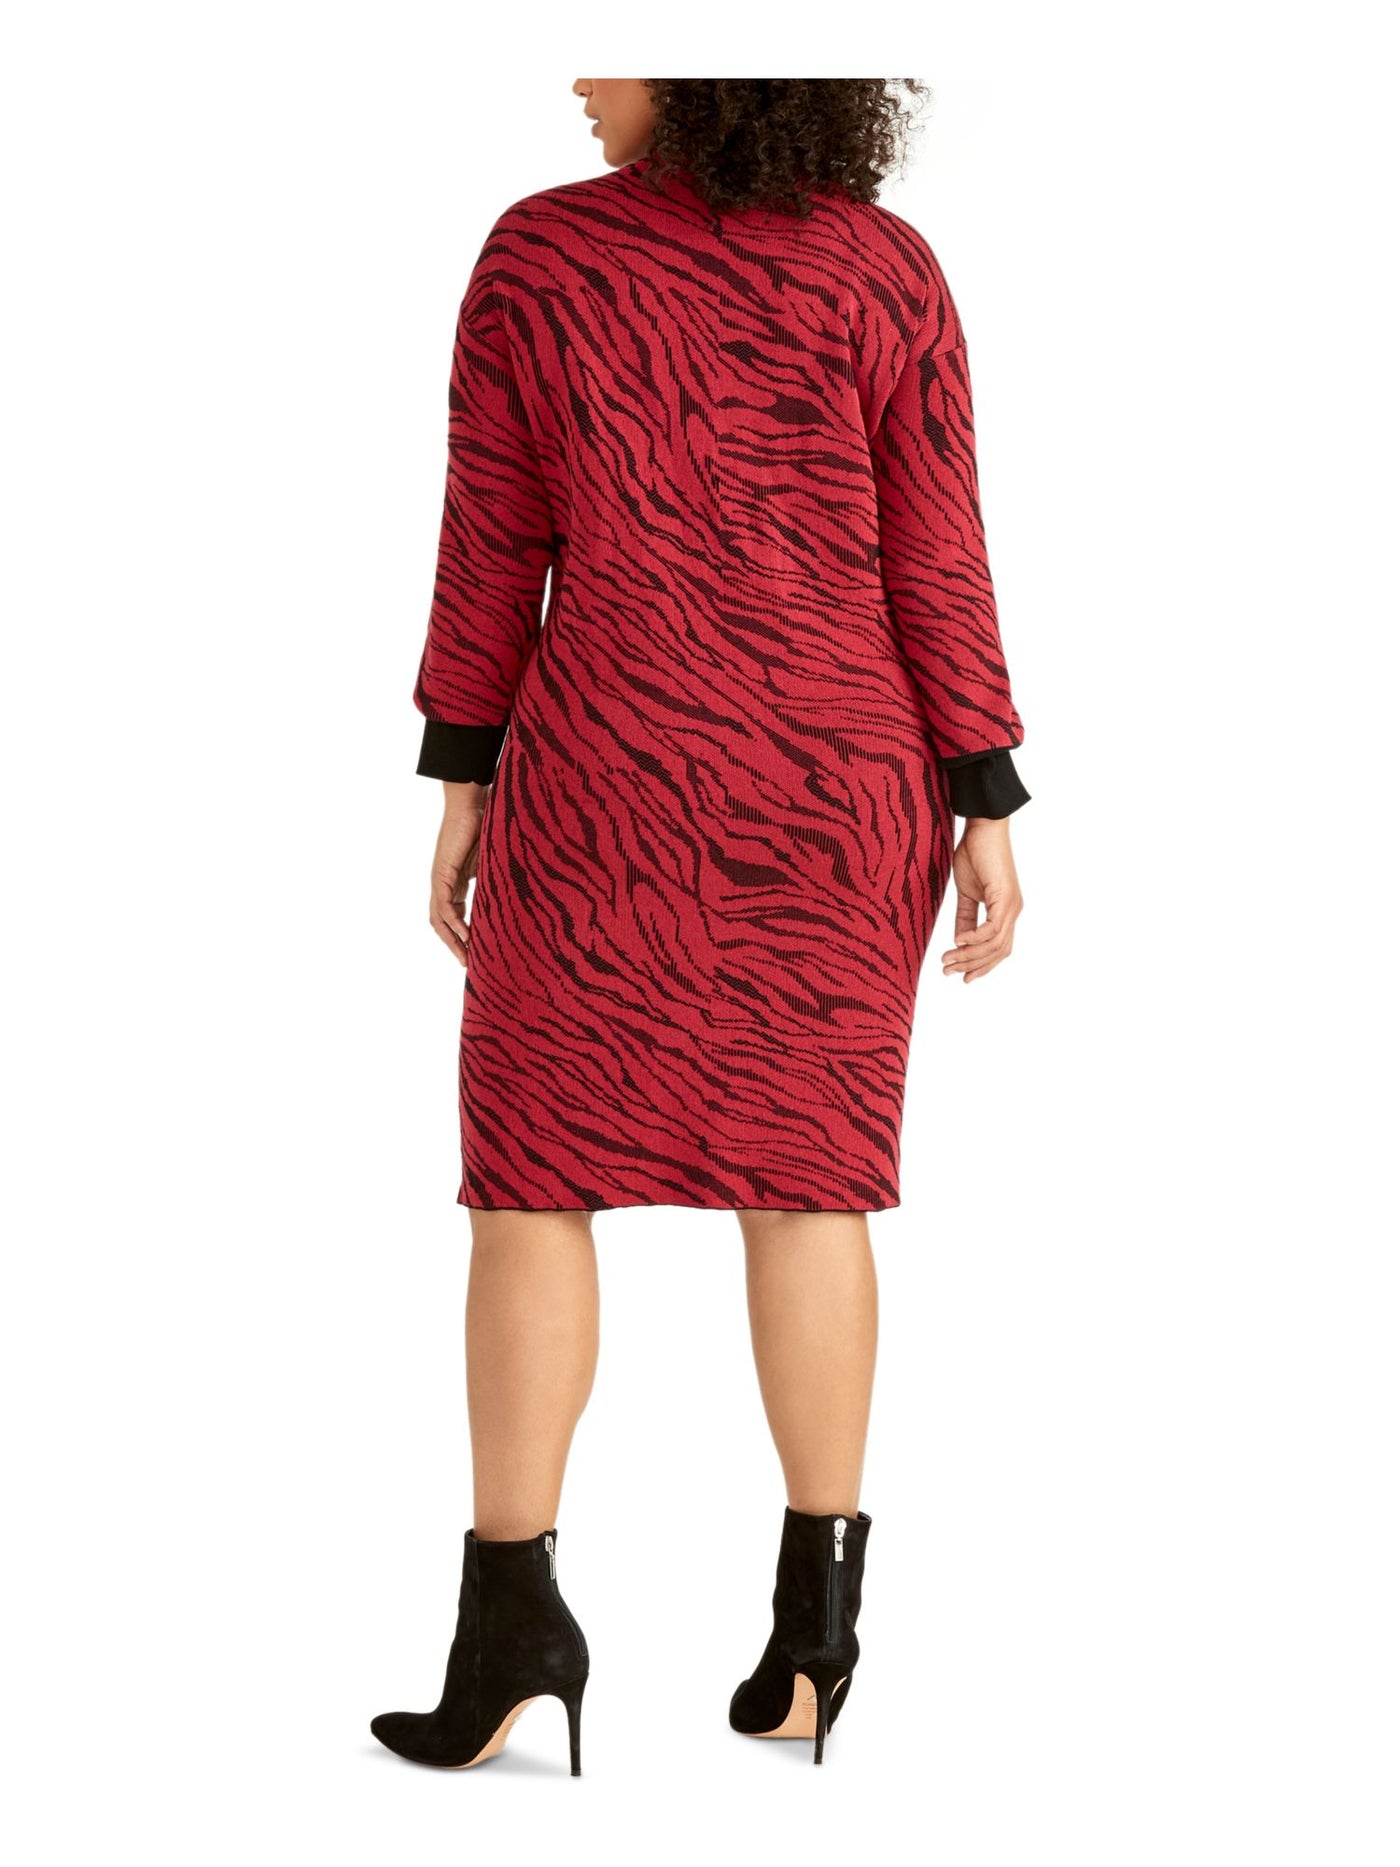 RACHEL RACHEL ROY Womens Red Patterned Long Sleeve V Neck Below The Knee Fit + Flare Dress Plus 2X